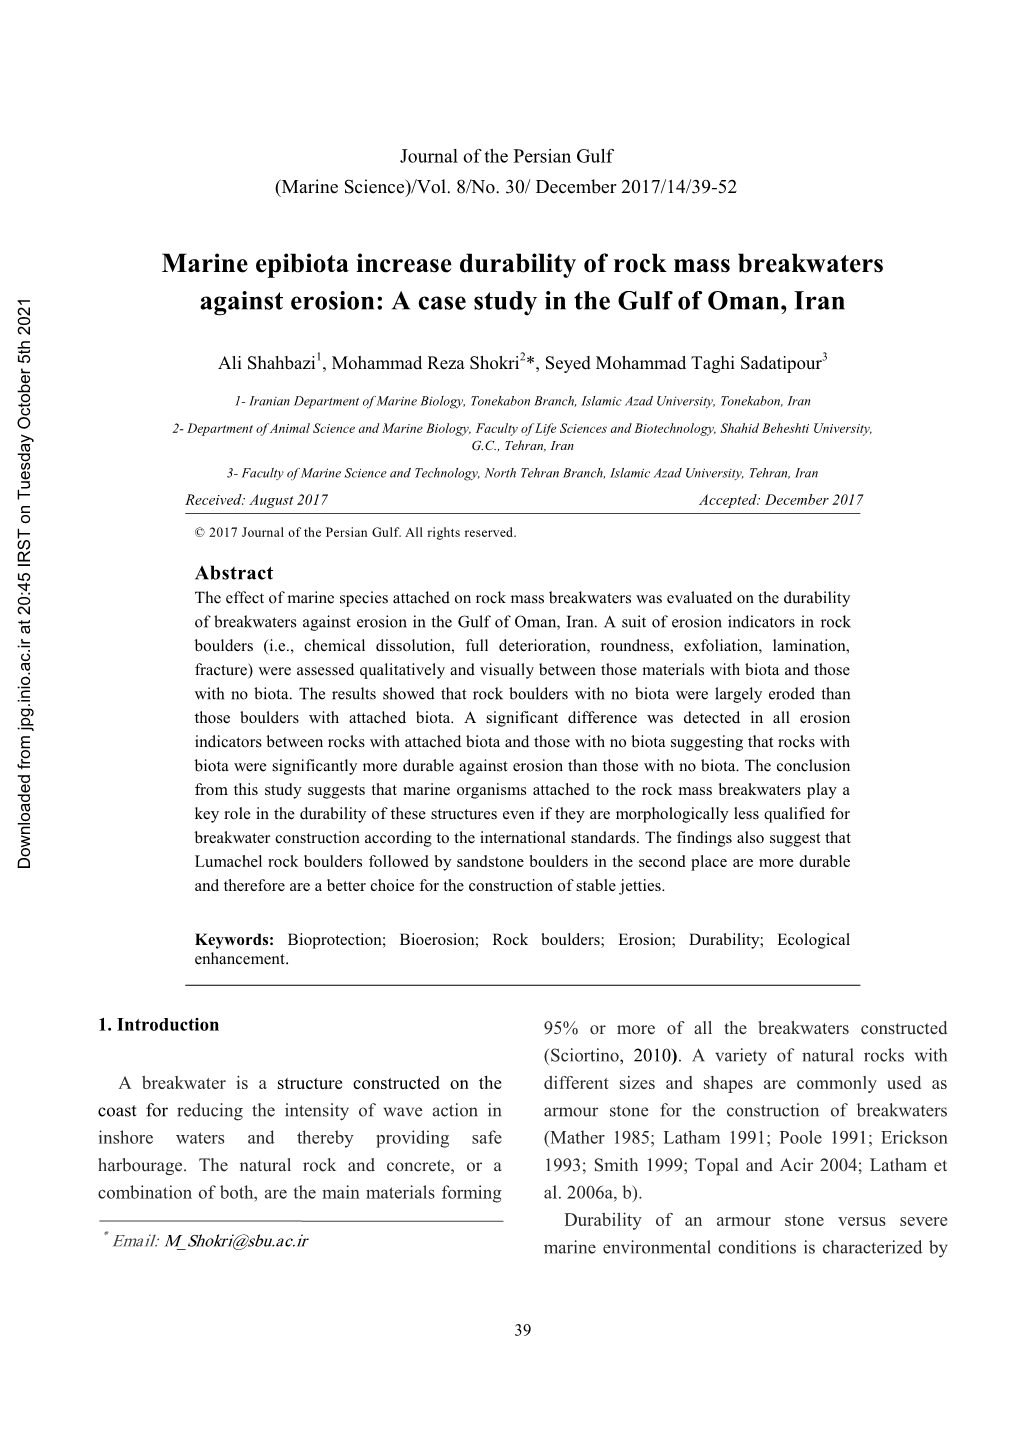 Marine Epibiota Increase Durability of Rock Mass Breakwaters Against Erosion: a Case Study in the Gulf of Oman, Iran